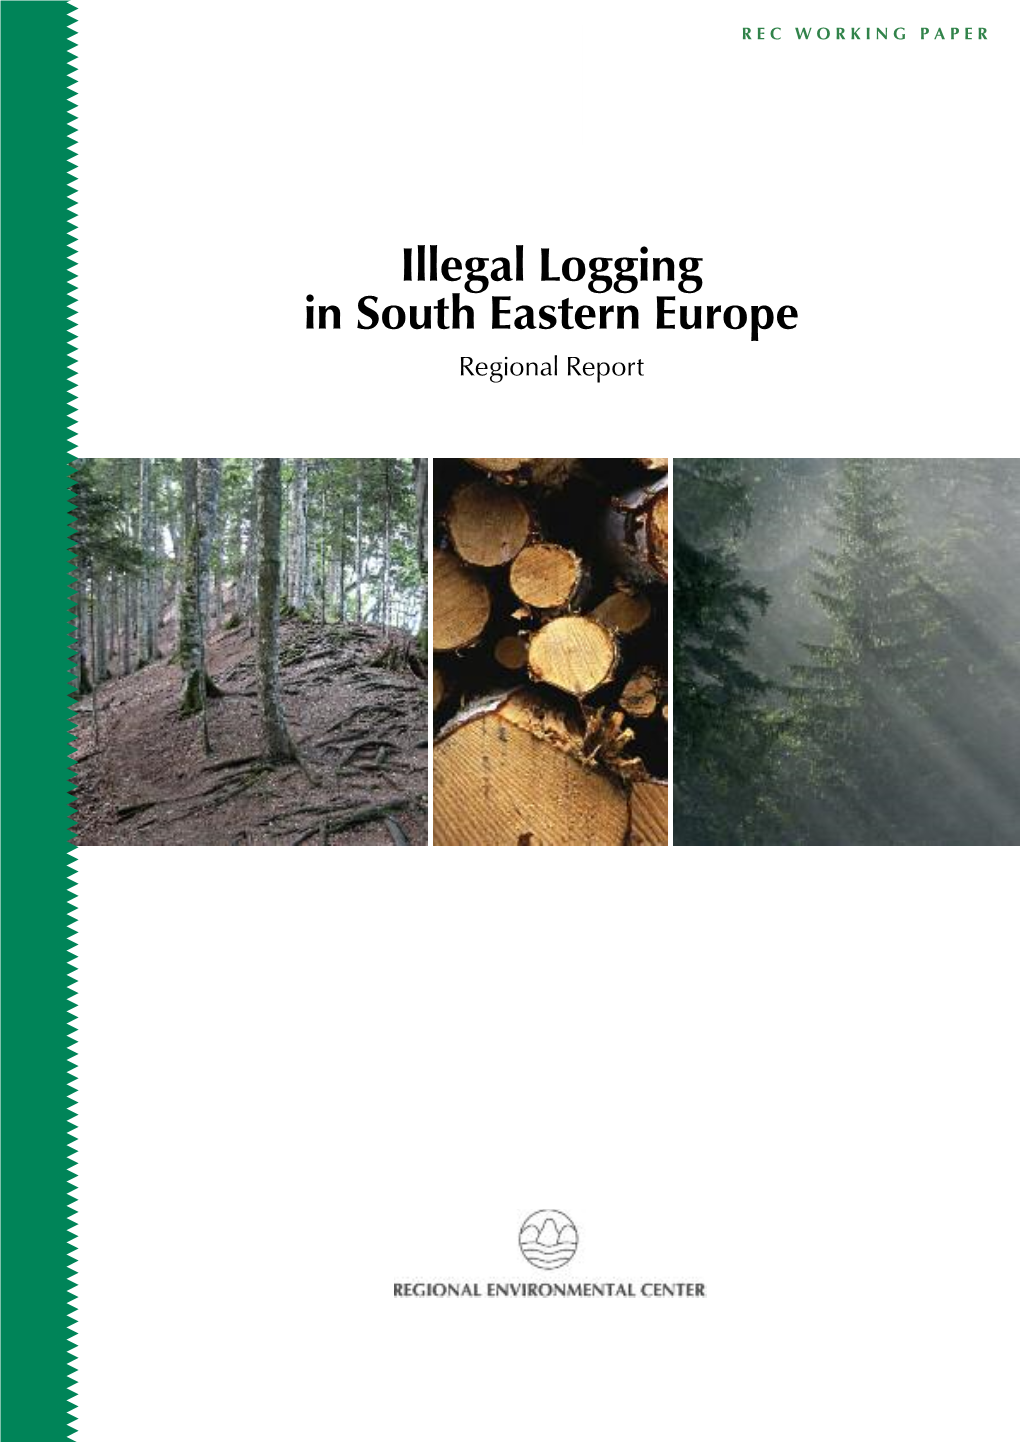 Illegal Logging in South Eastern Europe: Regional Report